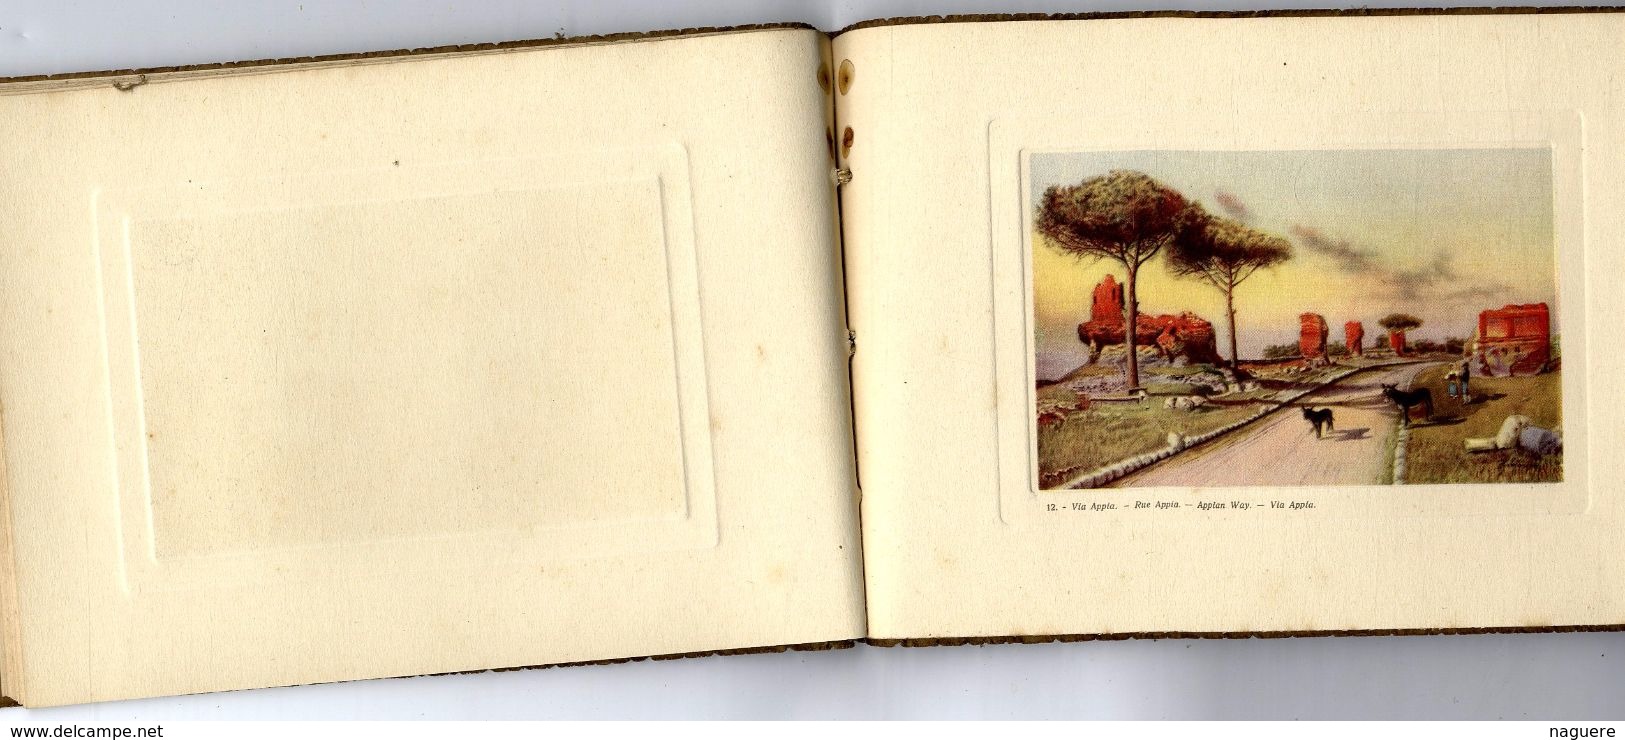 RICORDO DI ROMA  -  20 VEDATE ARTISTICHE  -  TRES BELLES GRAVURES COULEURS - Collectors Manuals